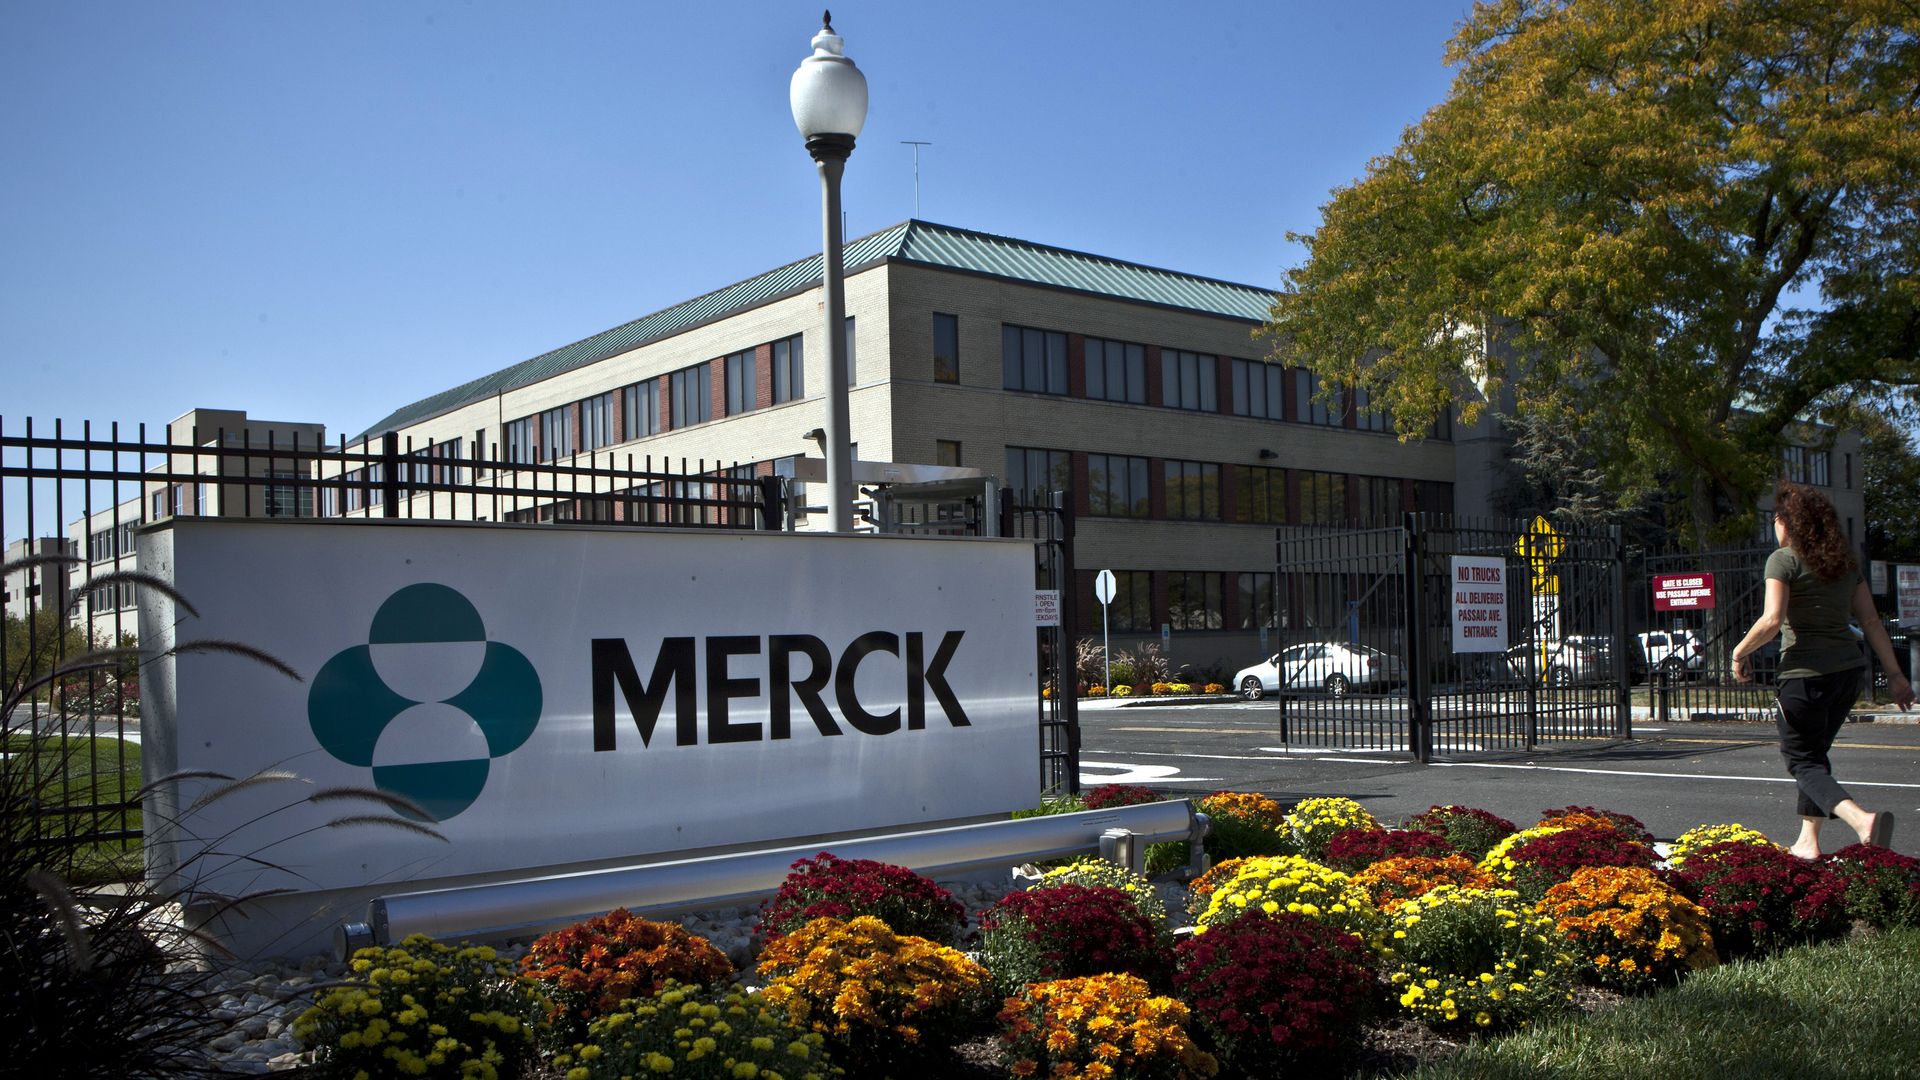 Merck headquarters building in New Jersey.